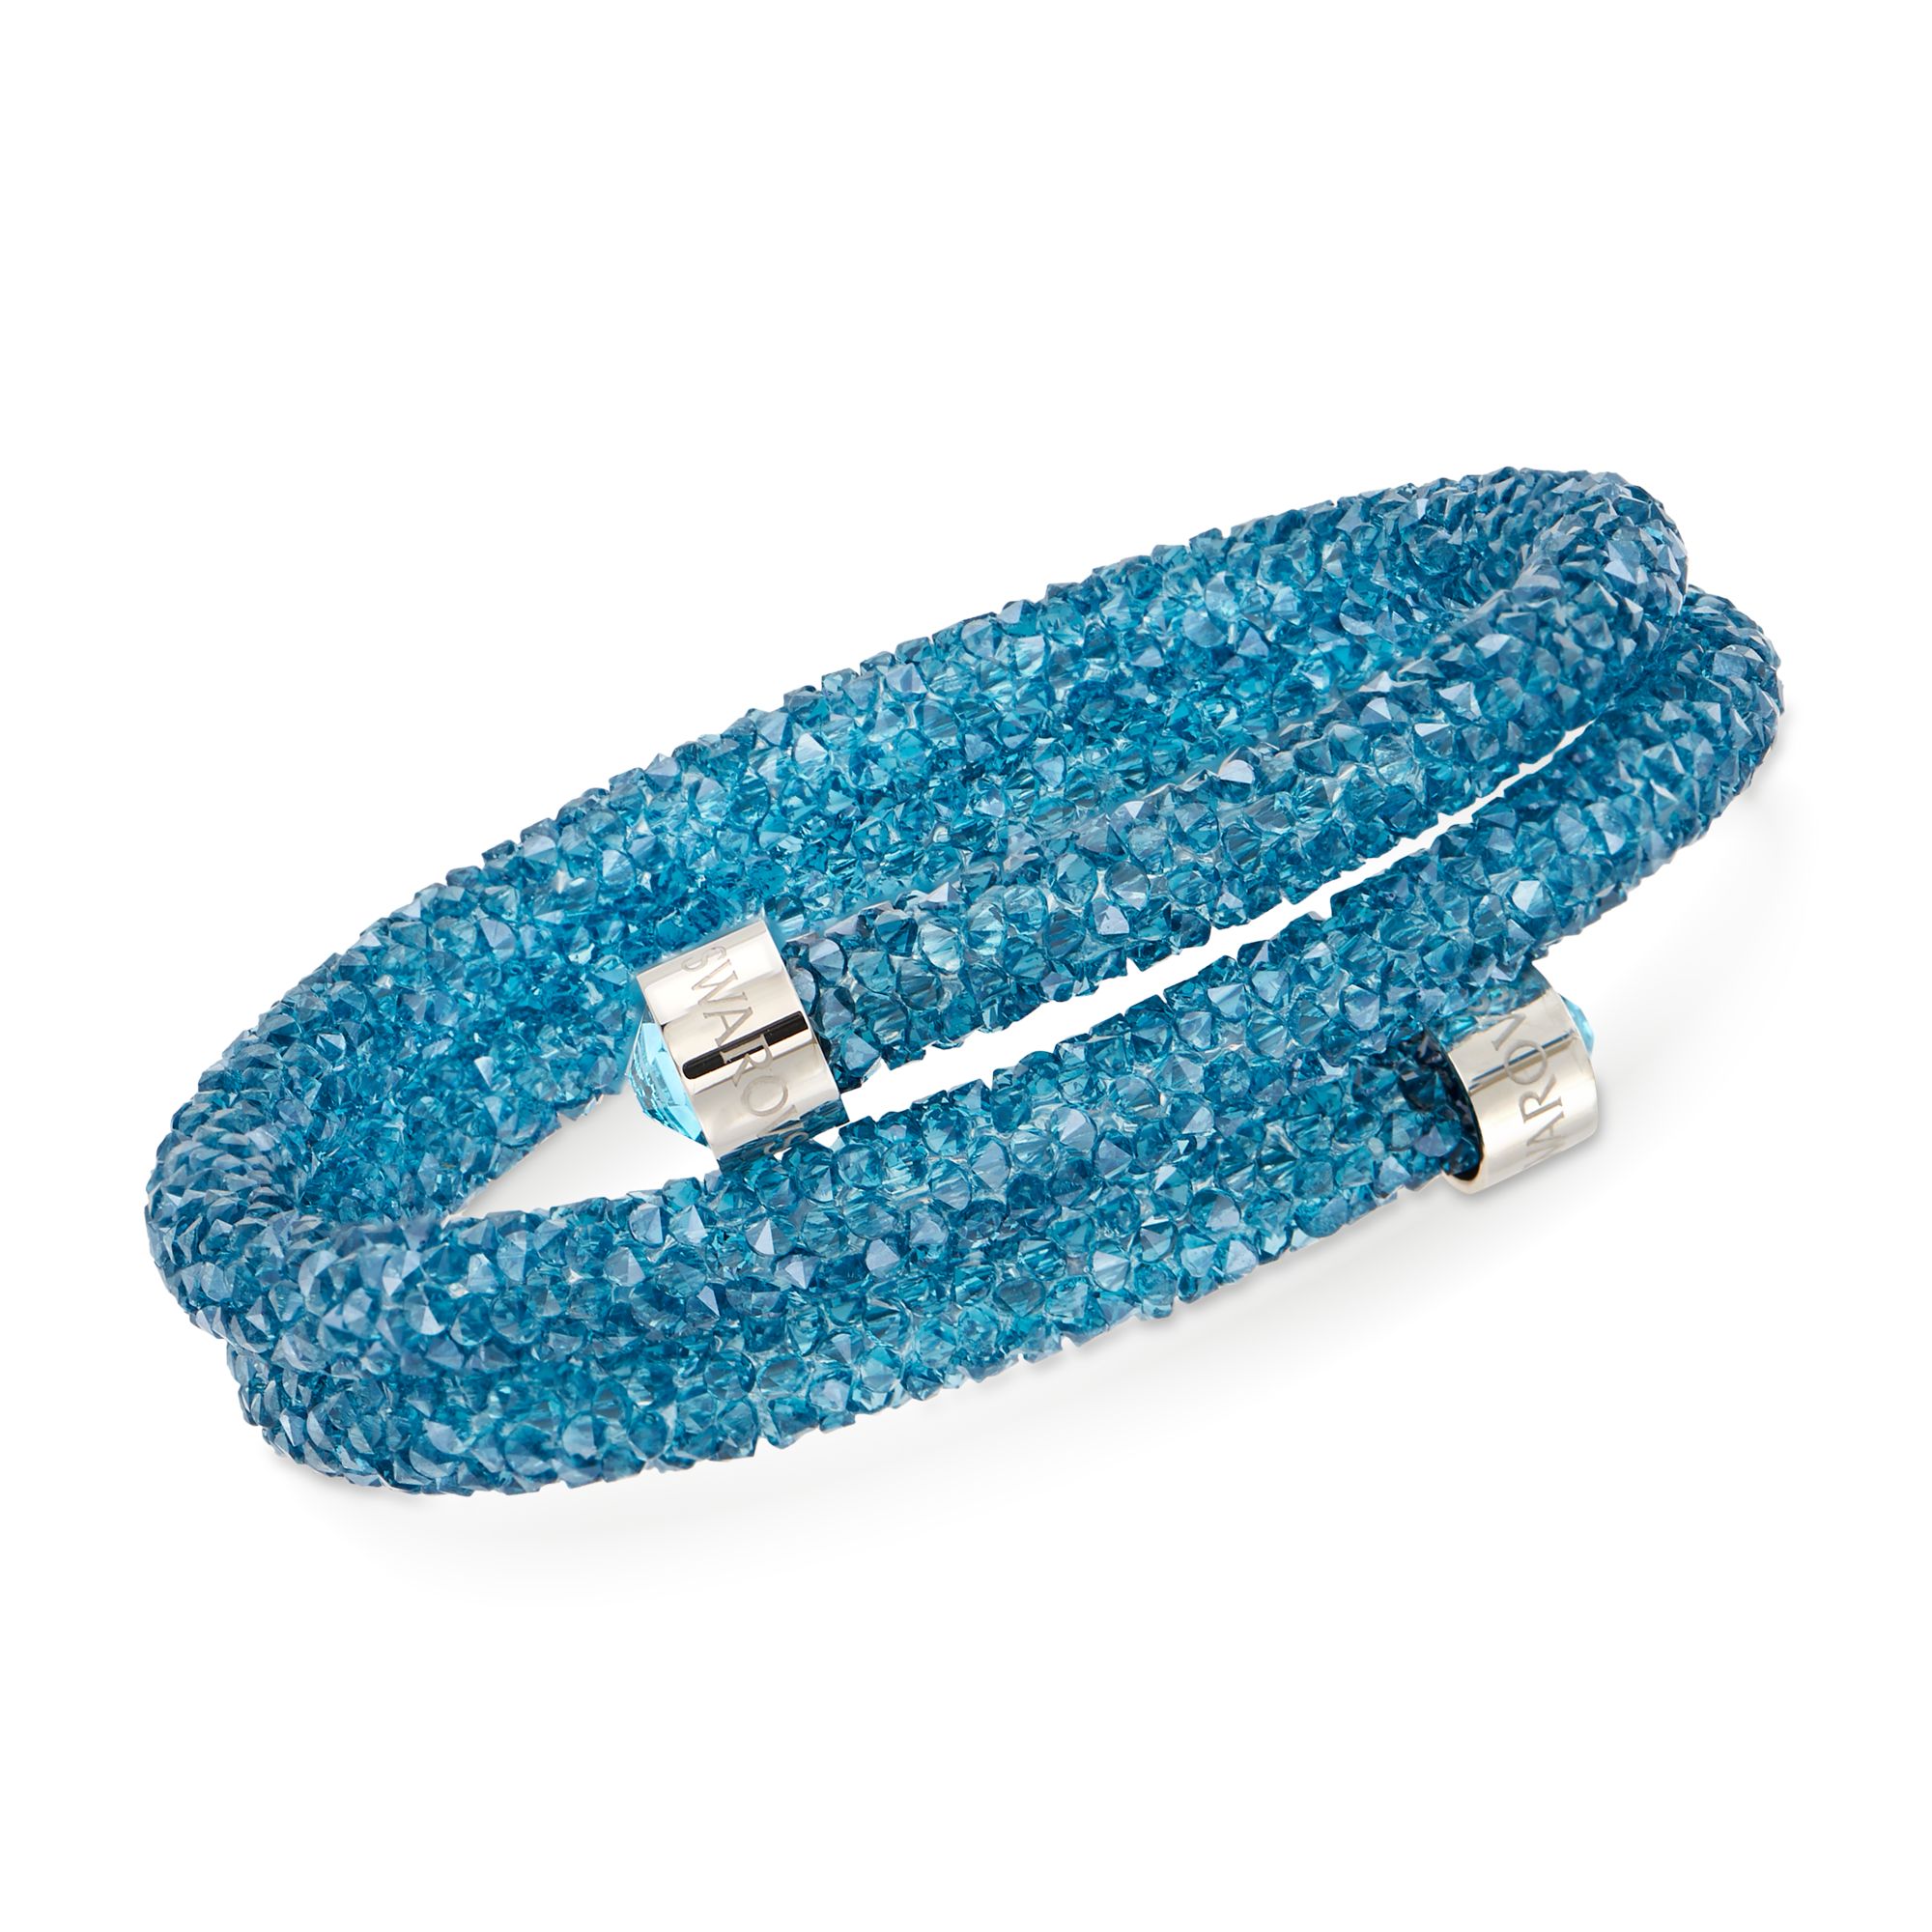 Swarovski Crystal "Crystaldust" Aqua Crystal Coil Bangle Bracelet with  Stainless Steel | Ross-Simons